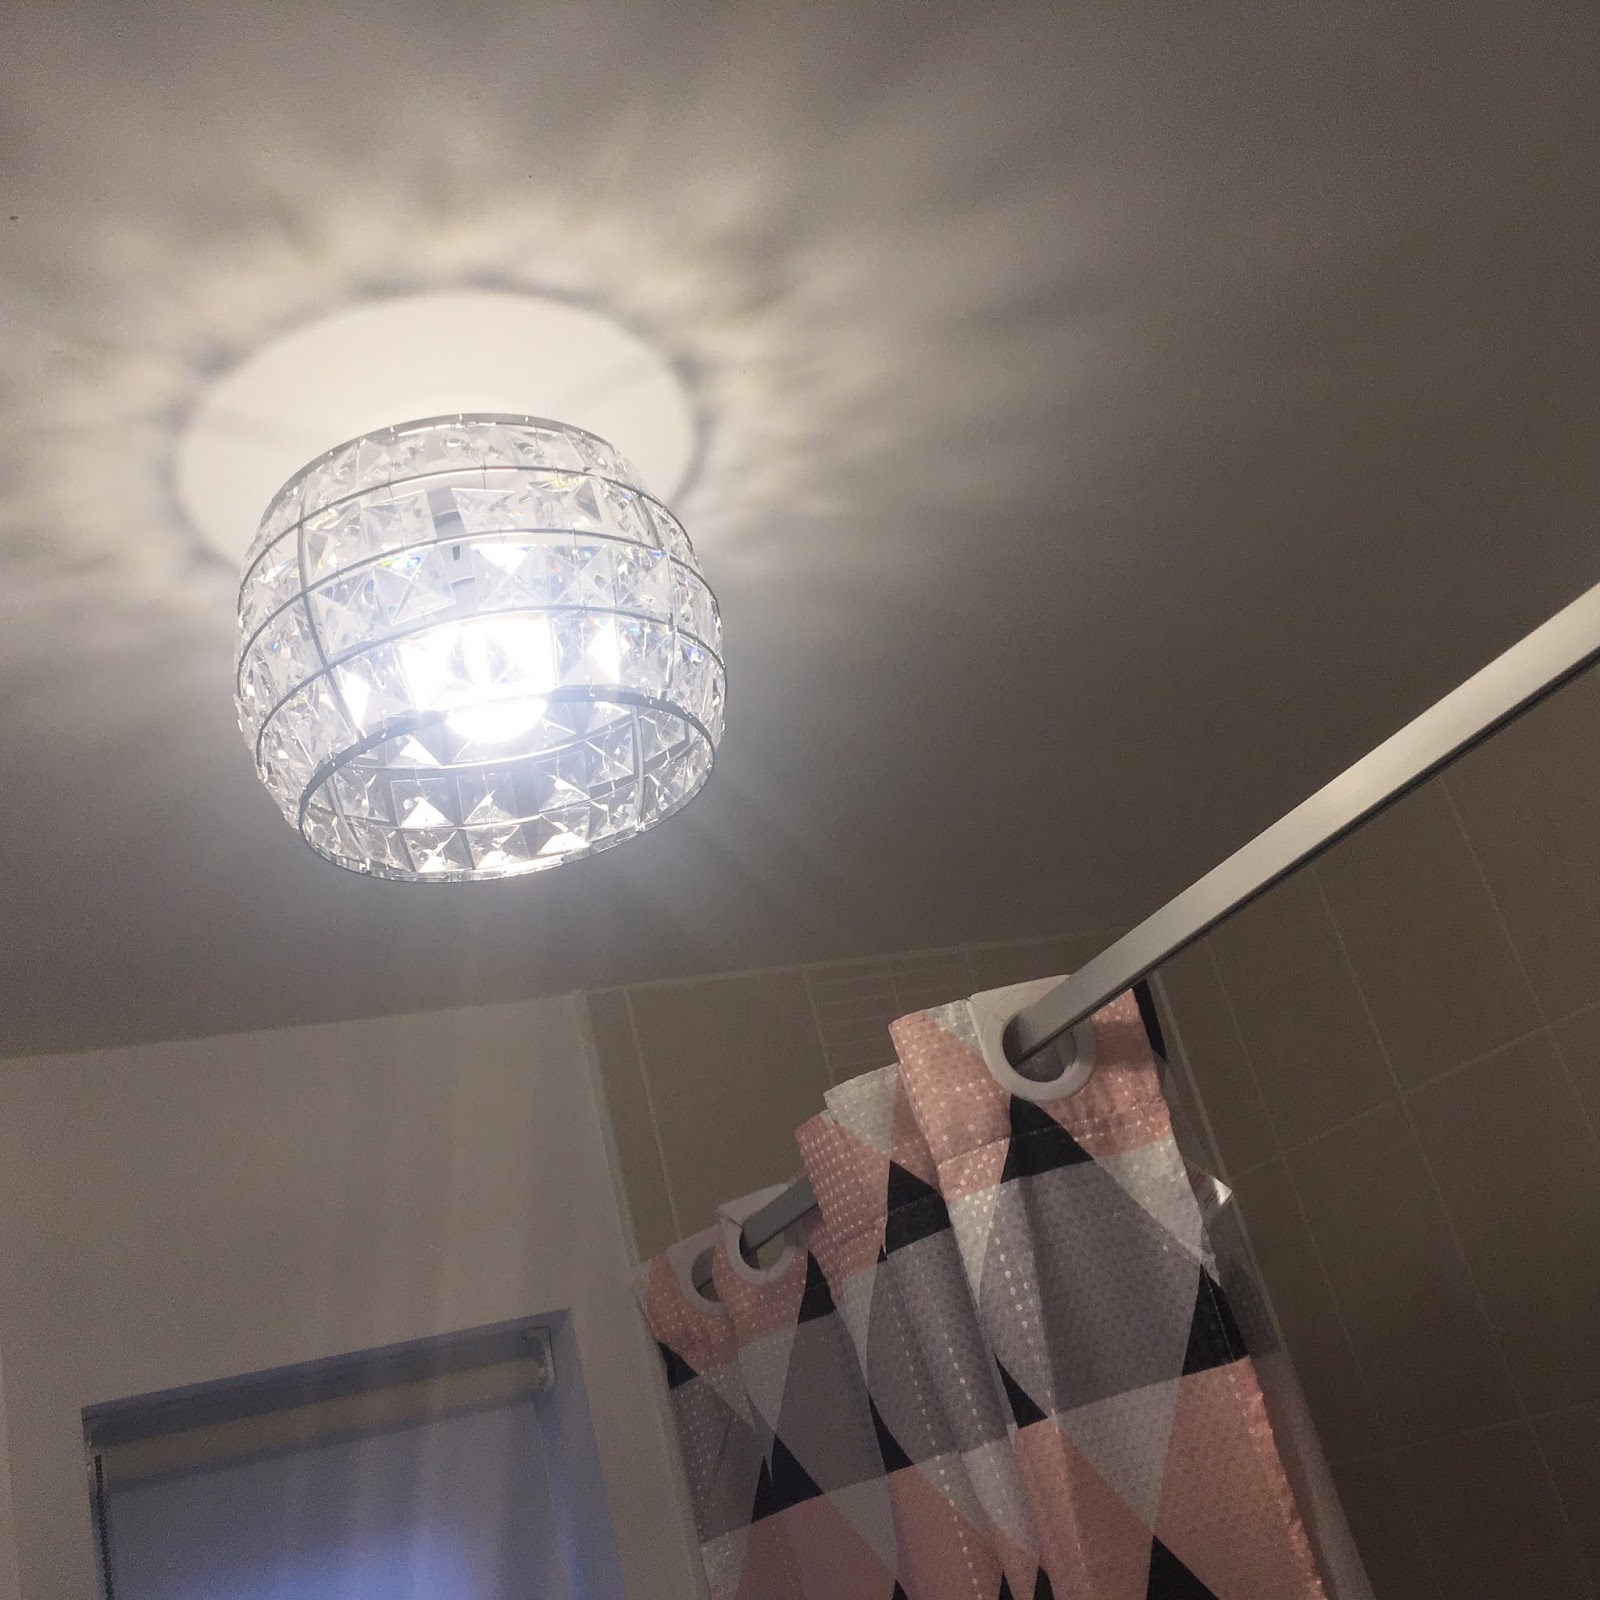 bathroom-lighting